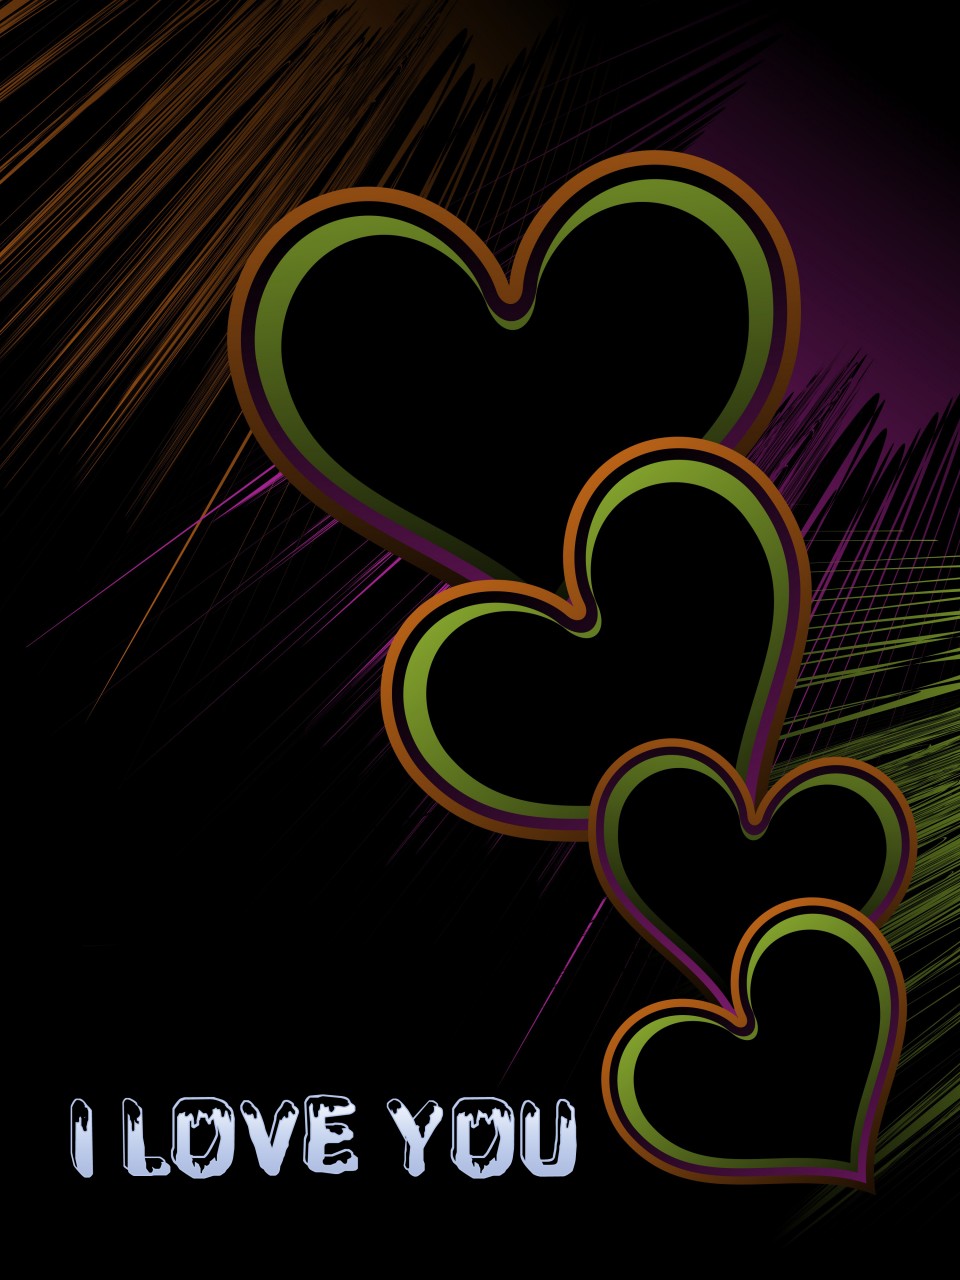 Colorful Hearts on Black Backgrounds Elsoar 960x1280